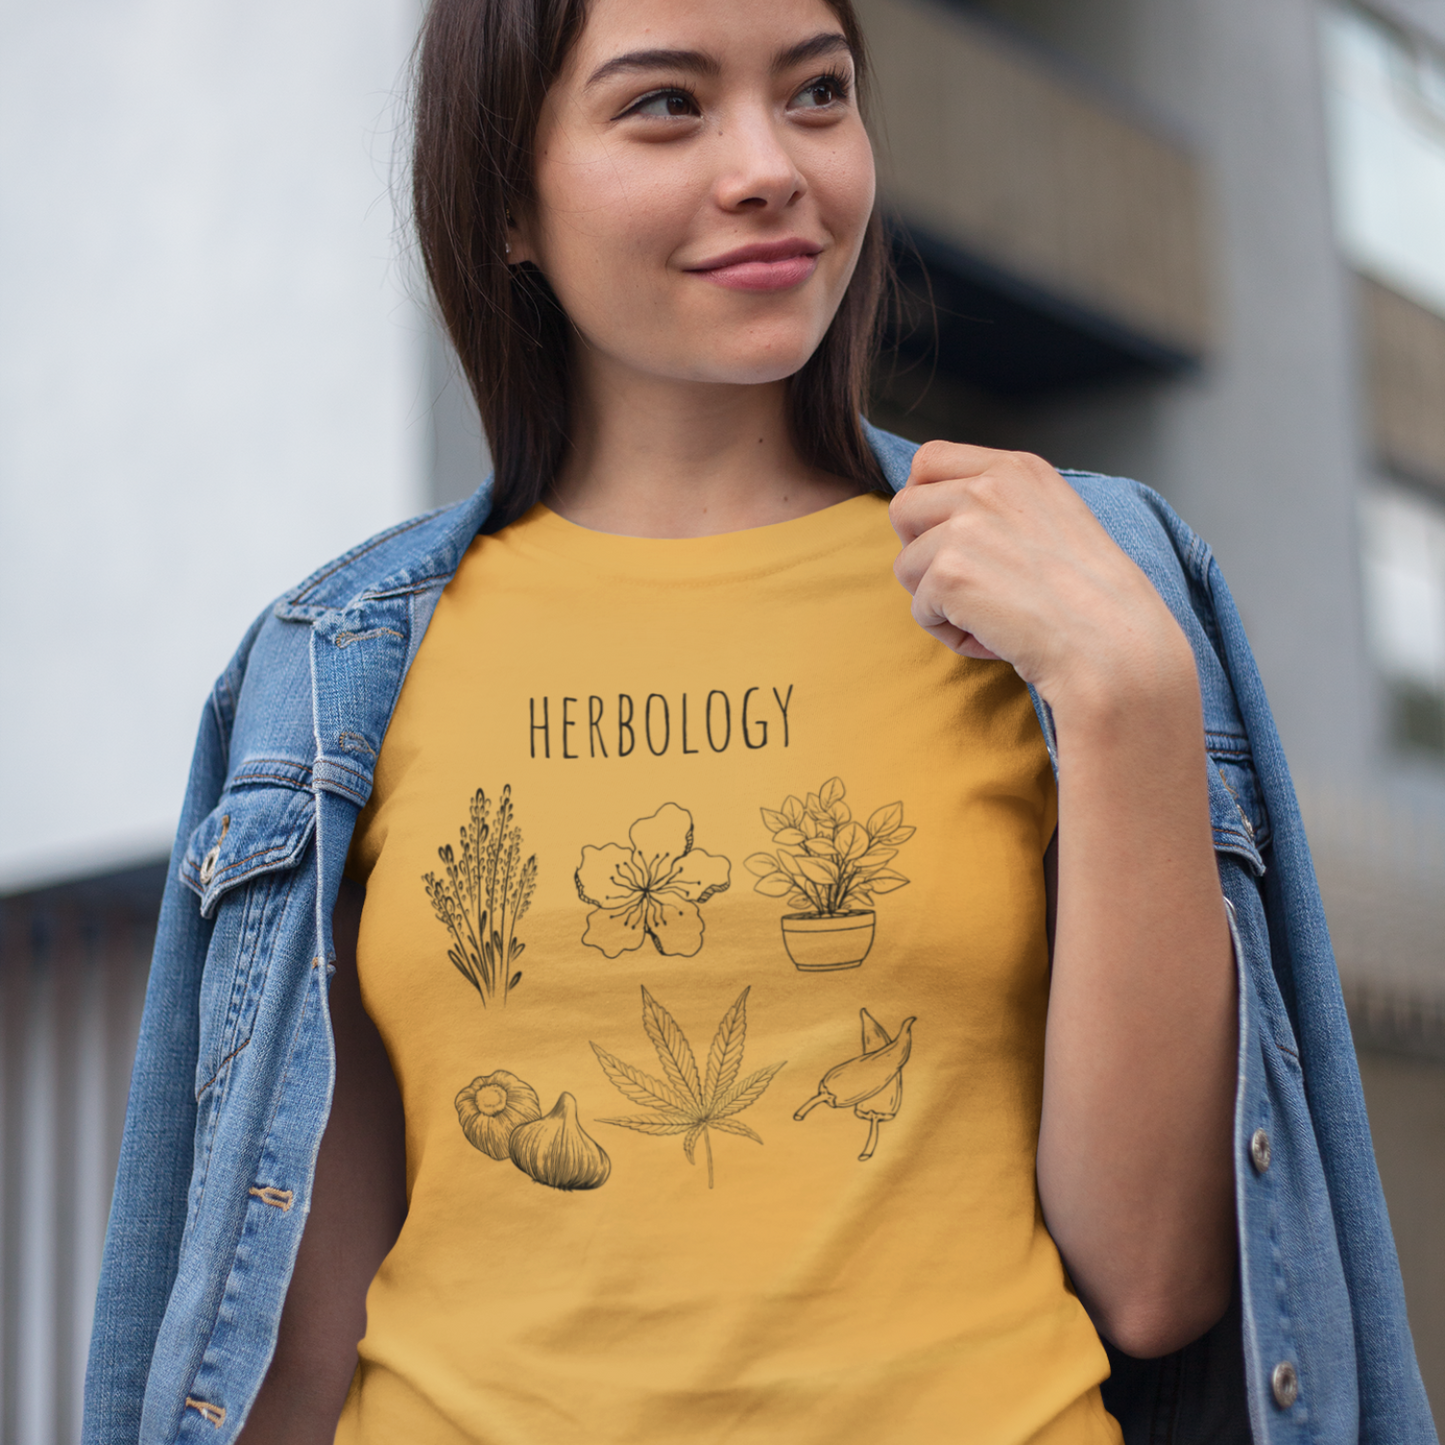 Herbology Comfort Colors 1717 Unisex T-shirt (Magical Studies Collection)